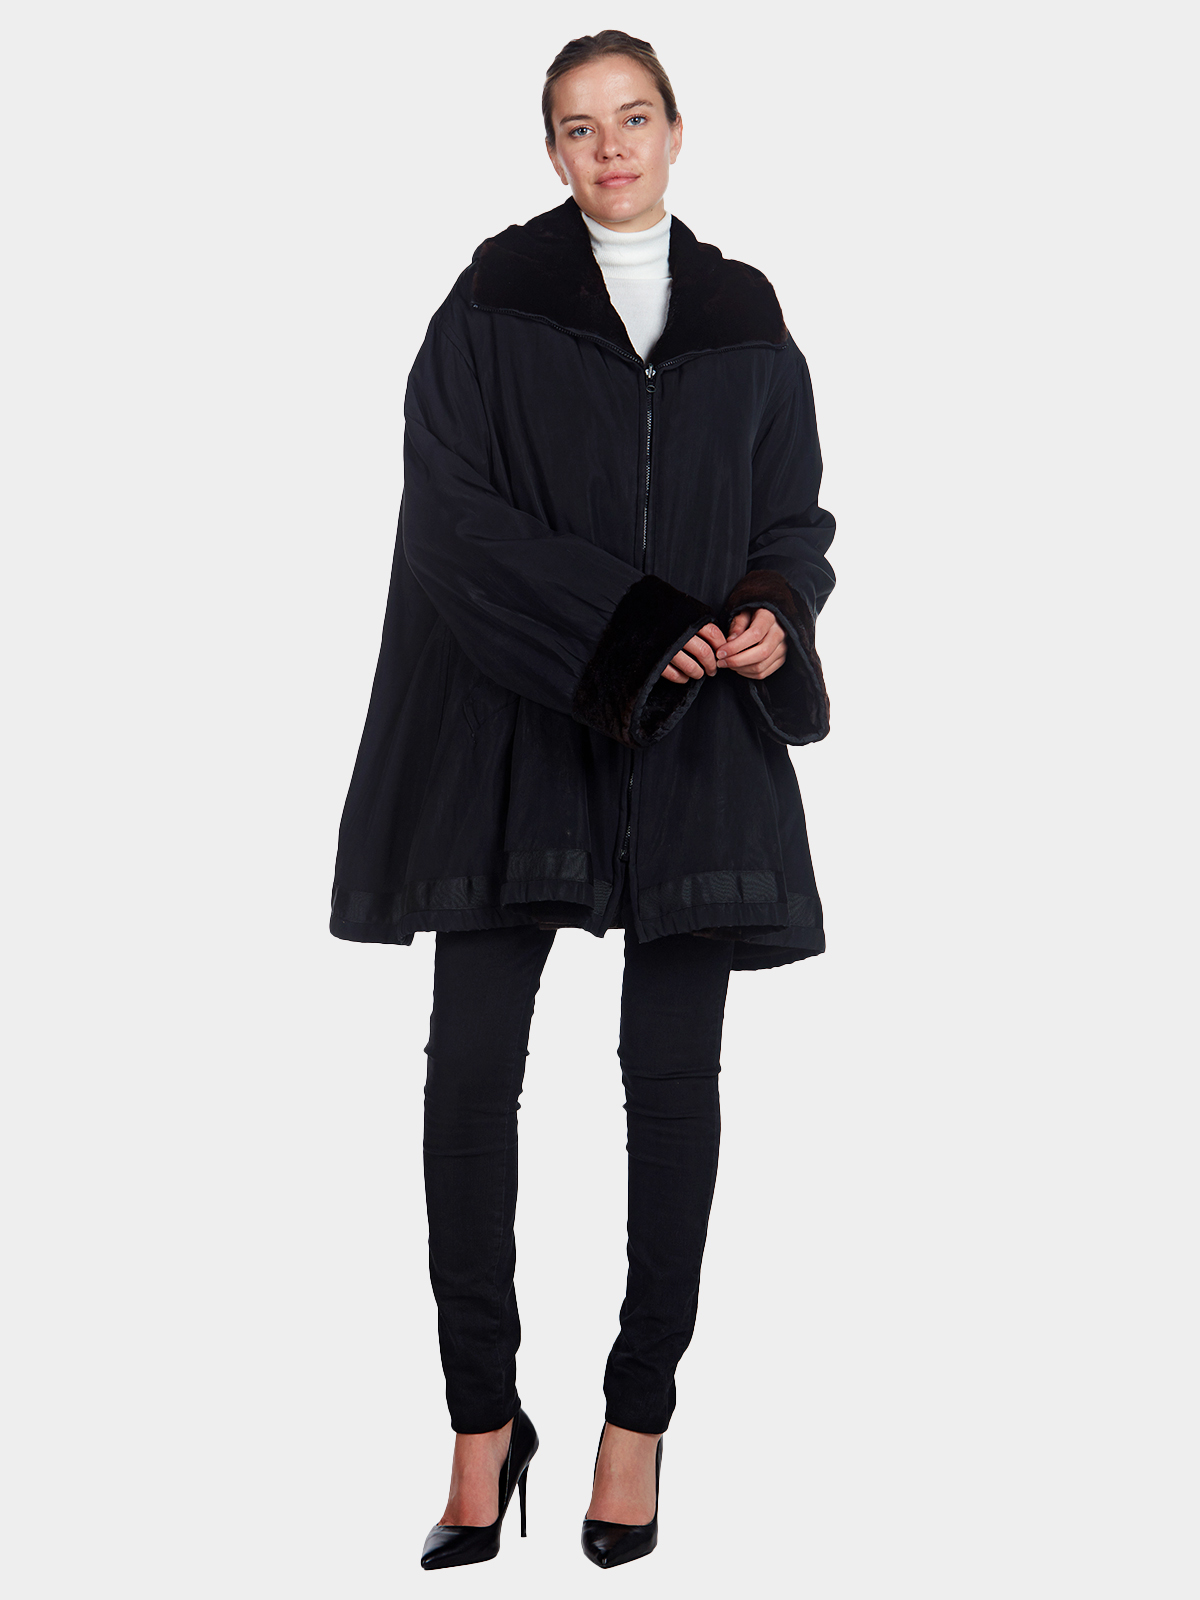 Woman's Black Fabric Raincoat with Sheared Mink Fur